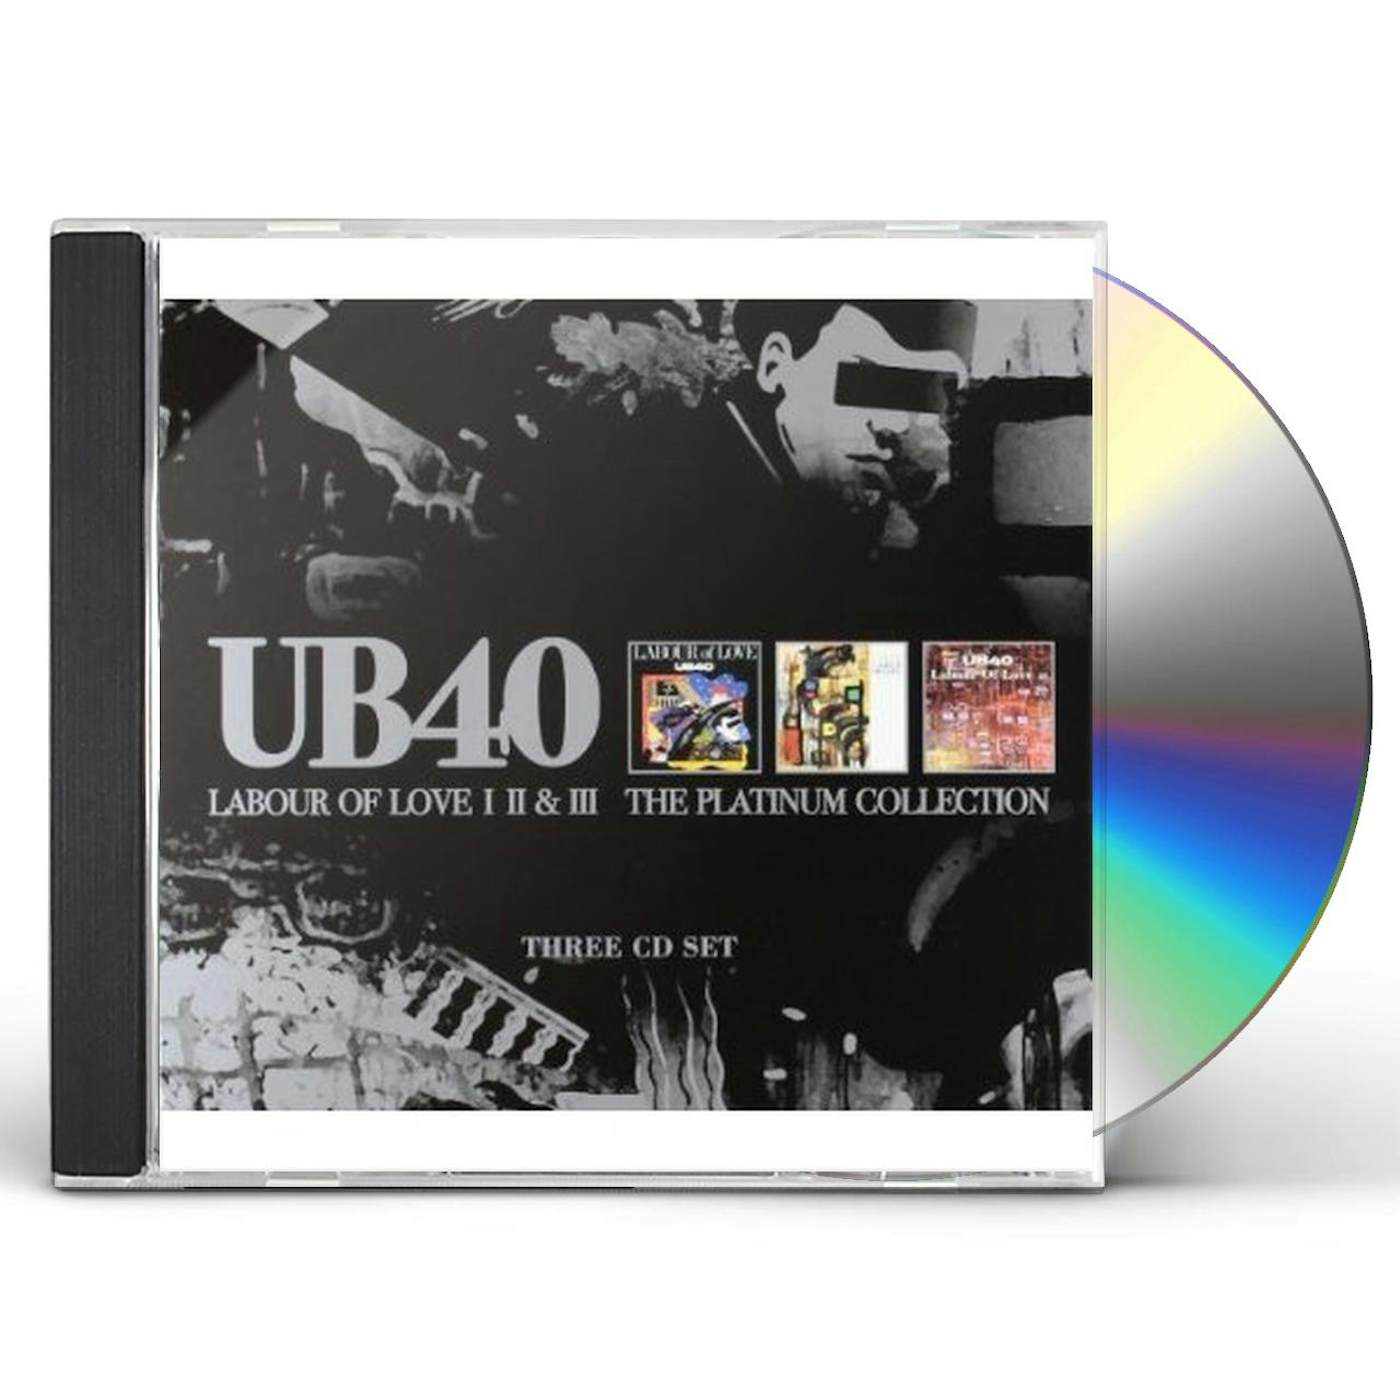 UB40 LABOUR OF LOVE 1 CD